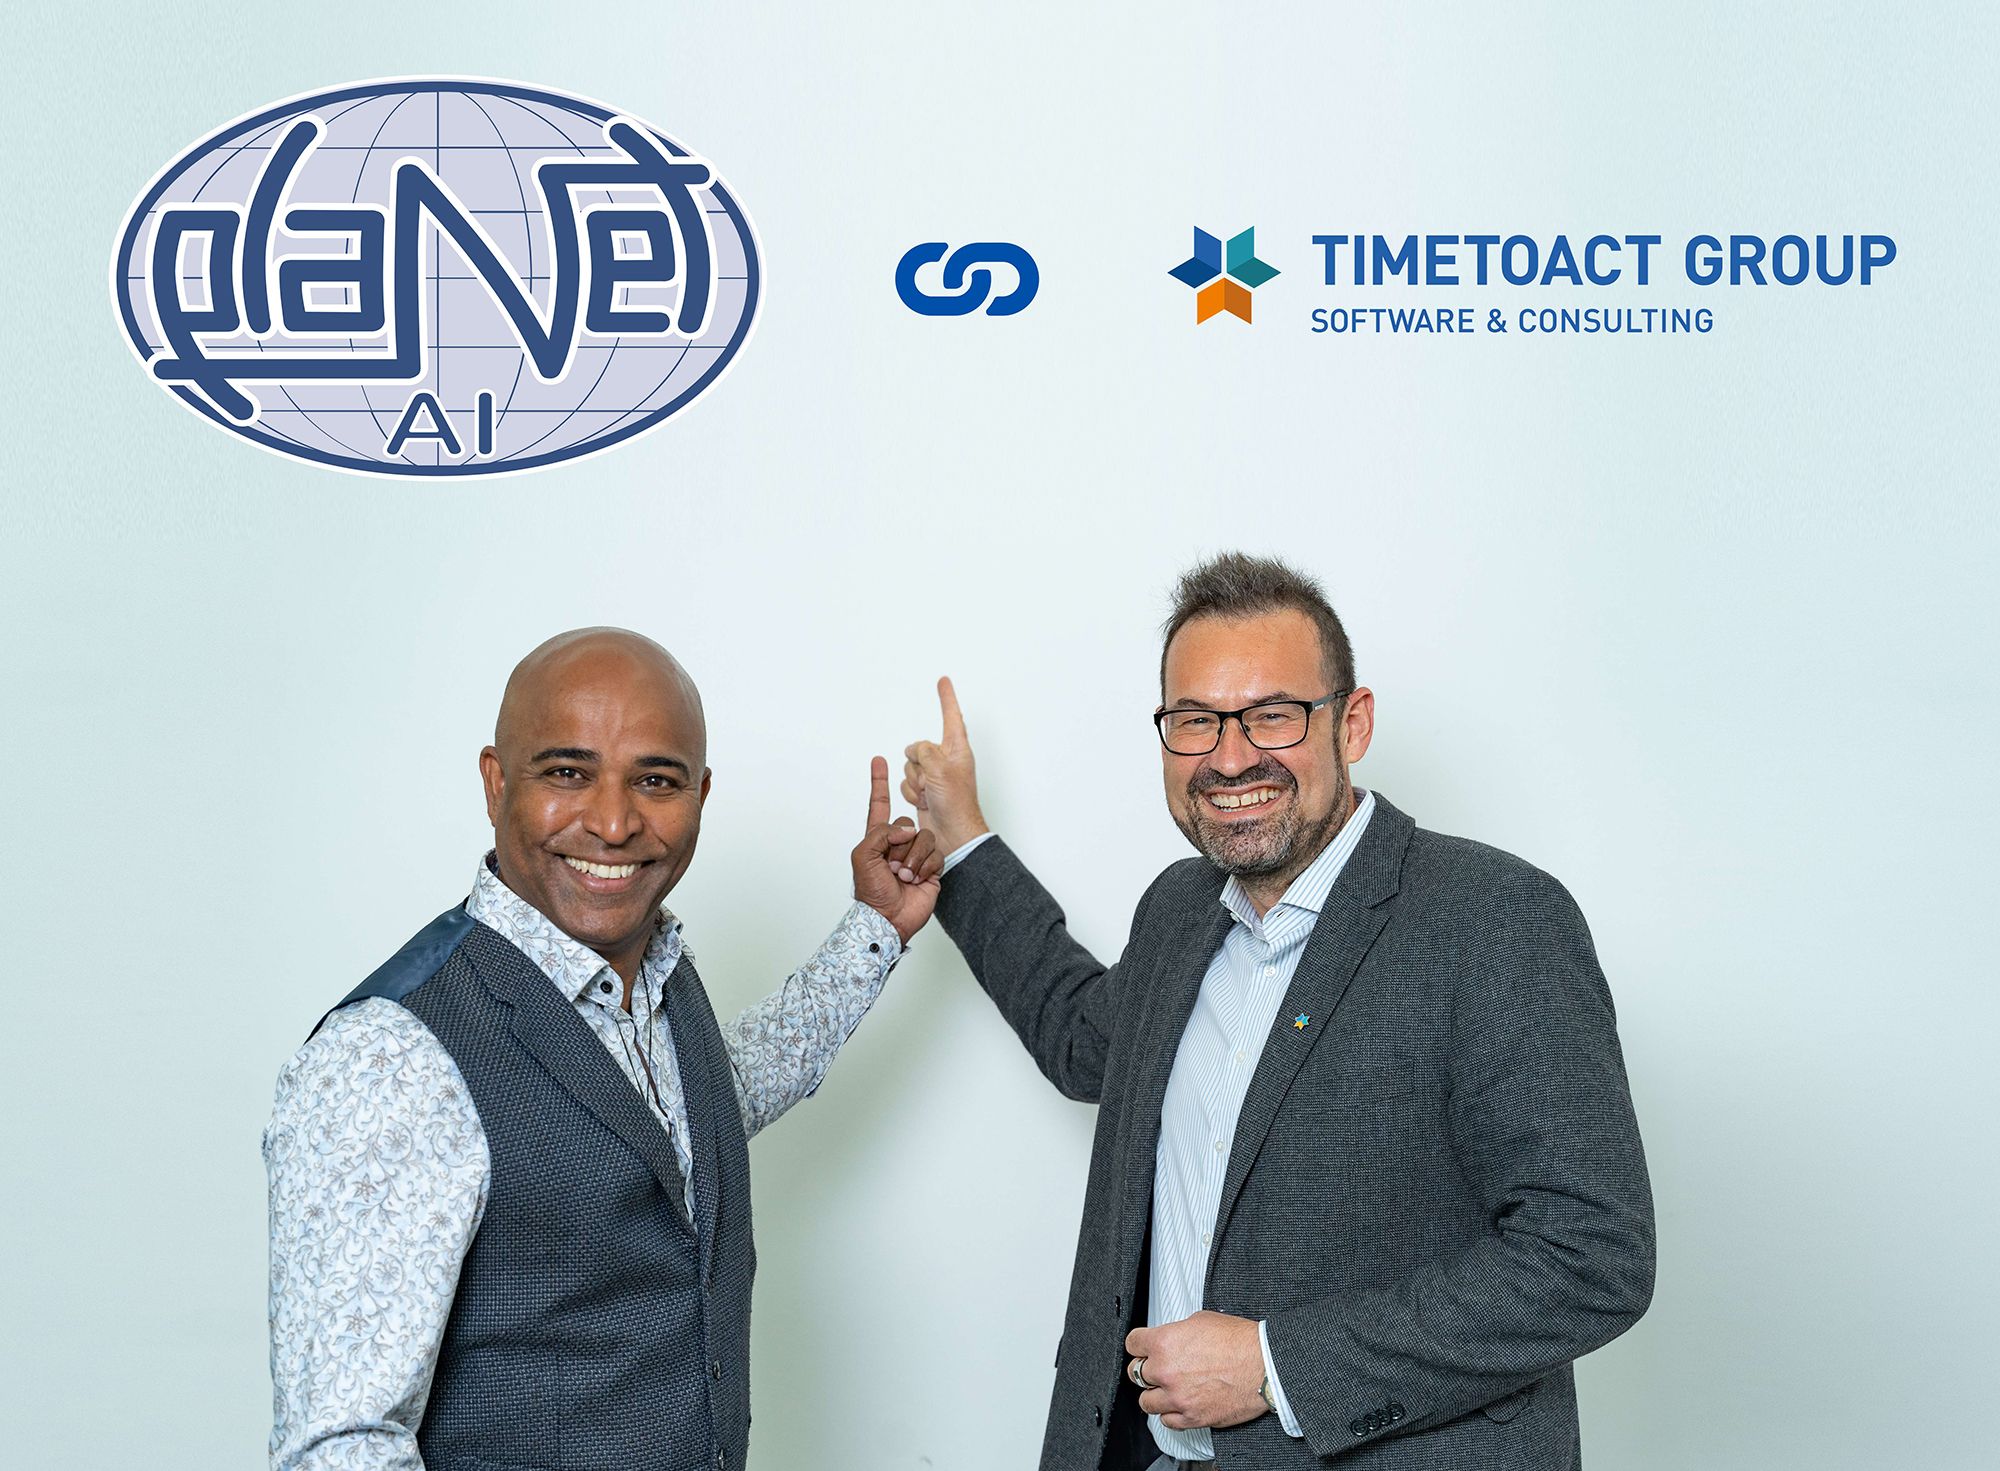 New business partner: TIMETOACT